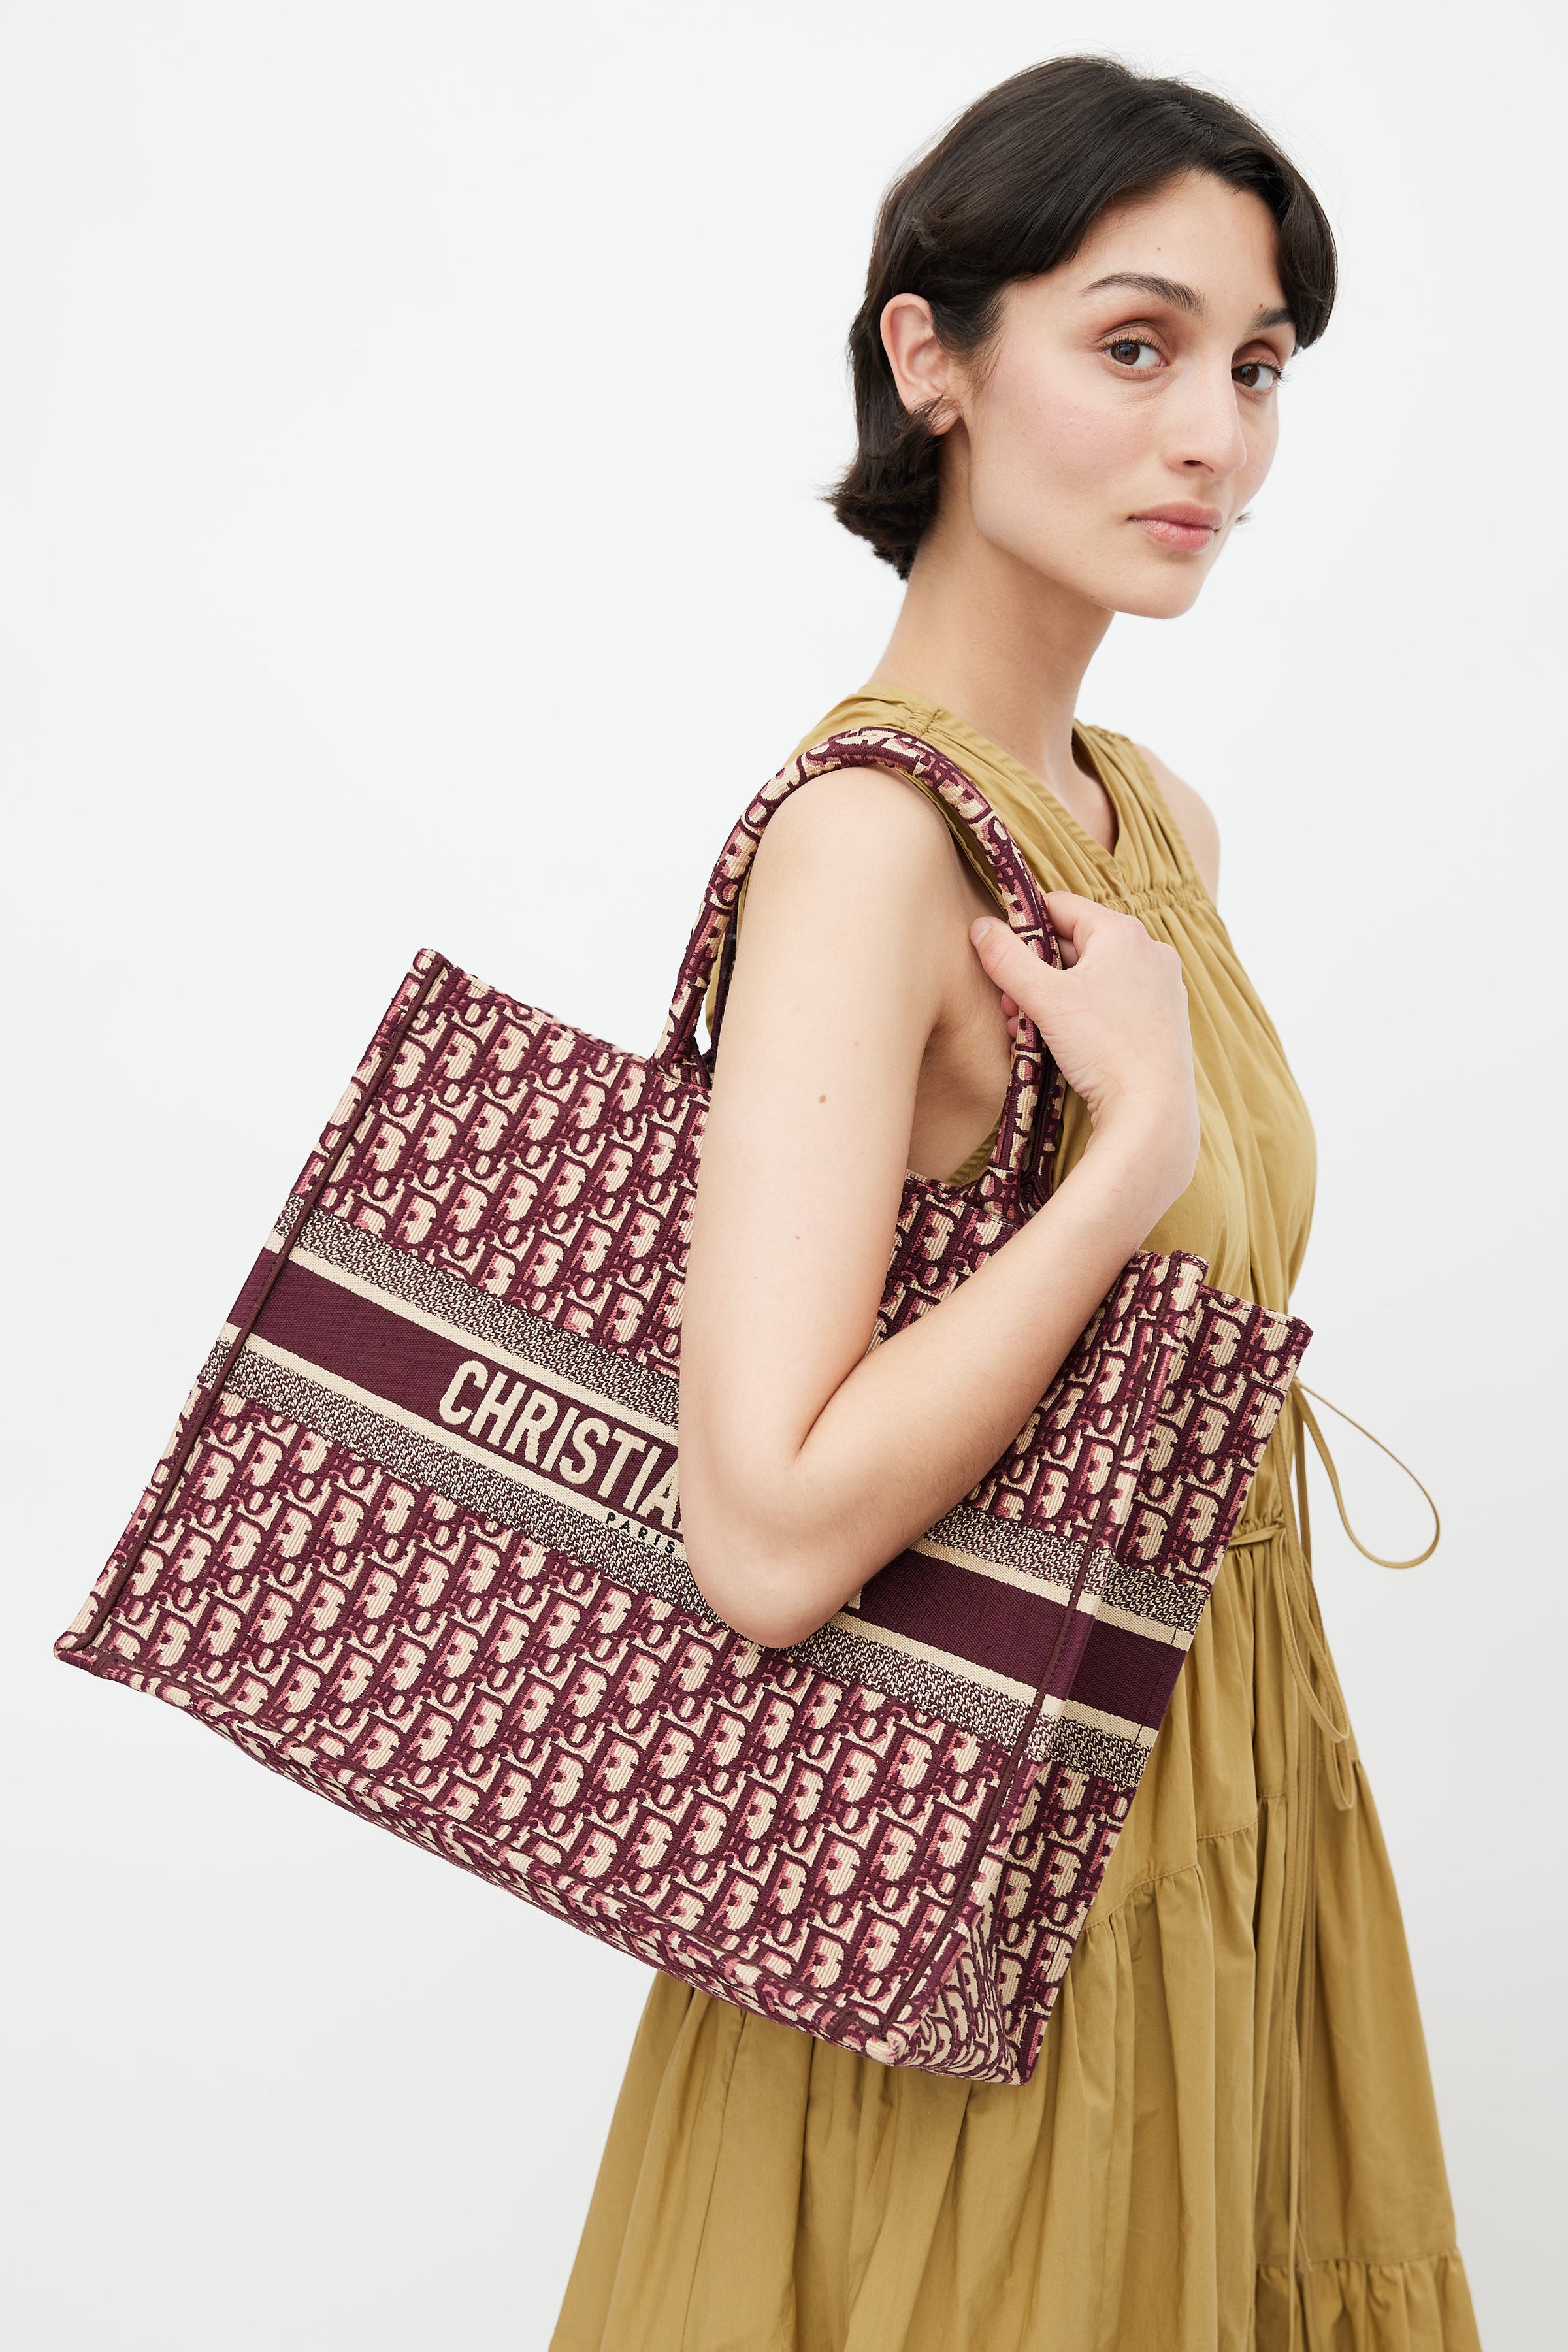 Women's Large Dior Book Tote Oblique bag, DIOR